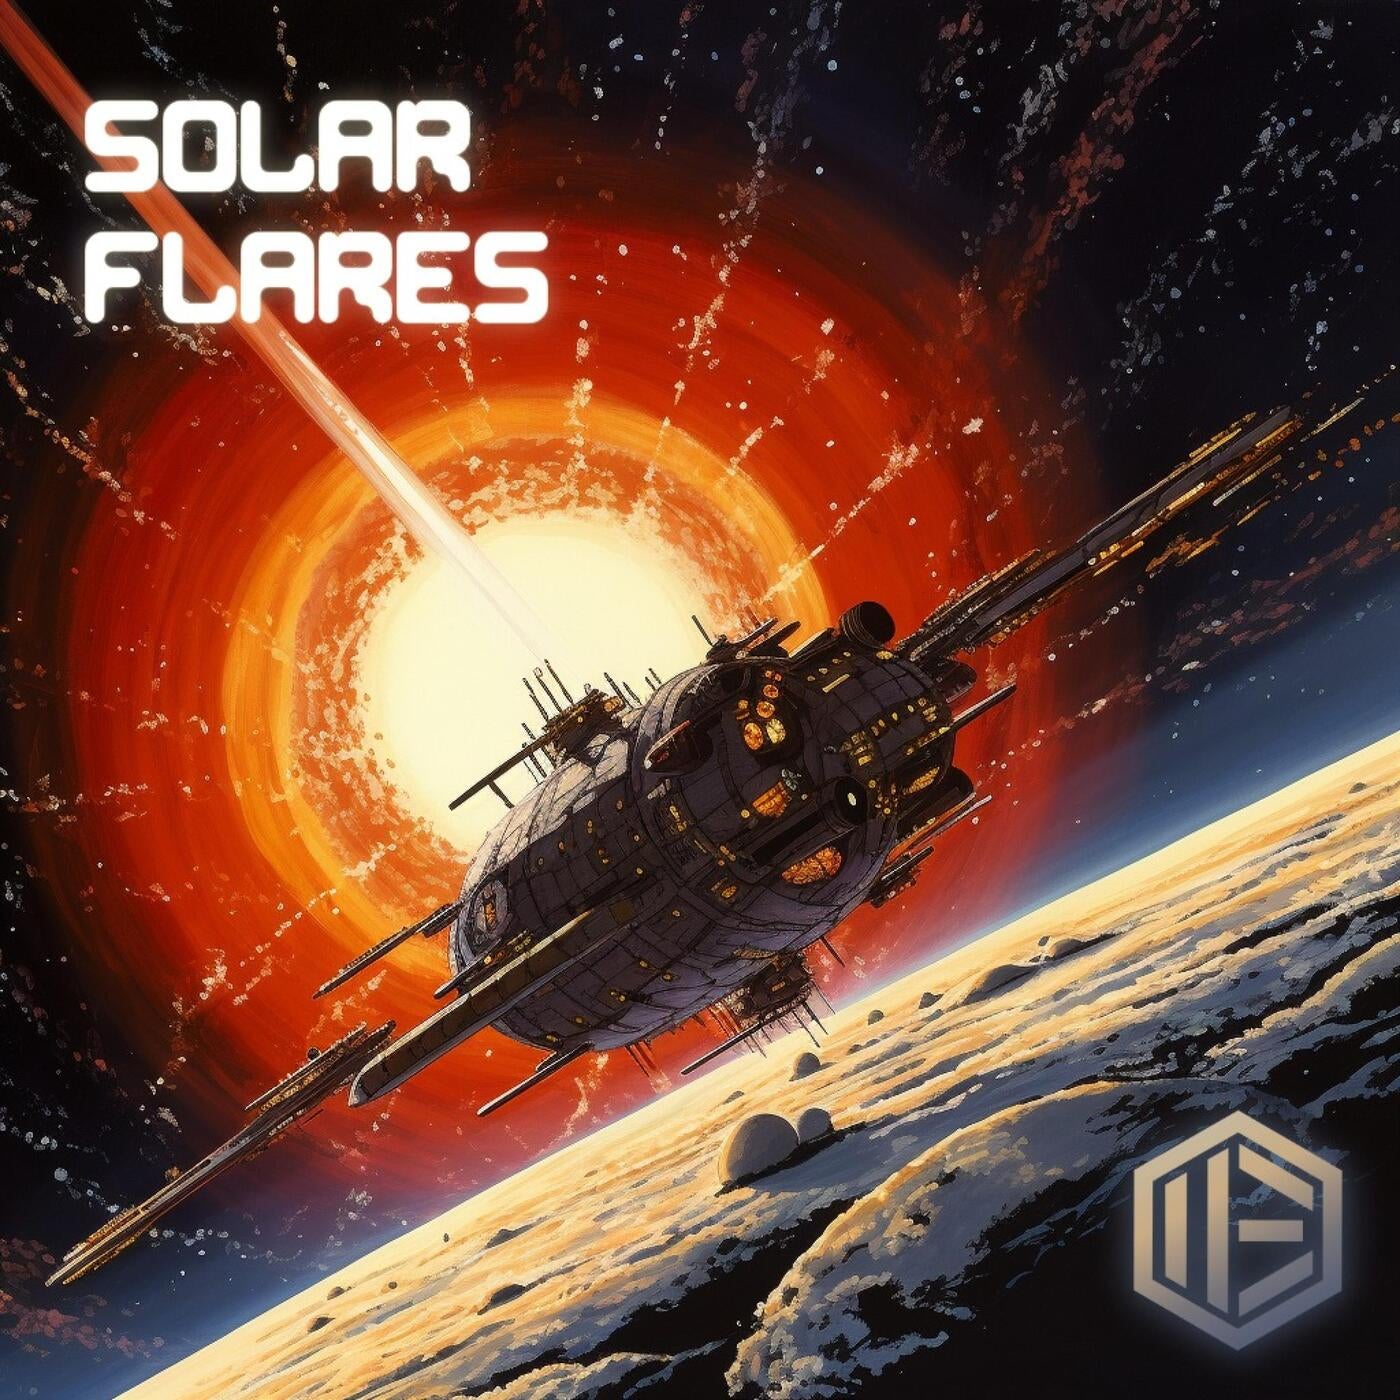 Solar Flares